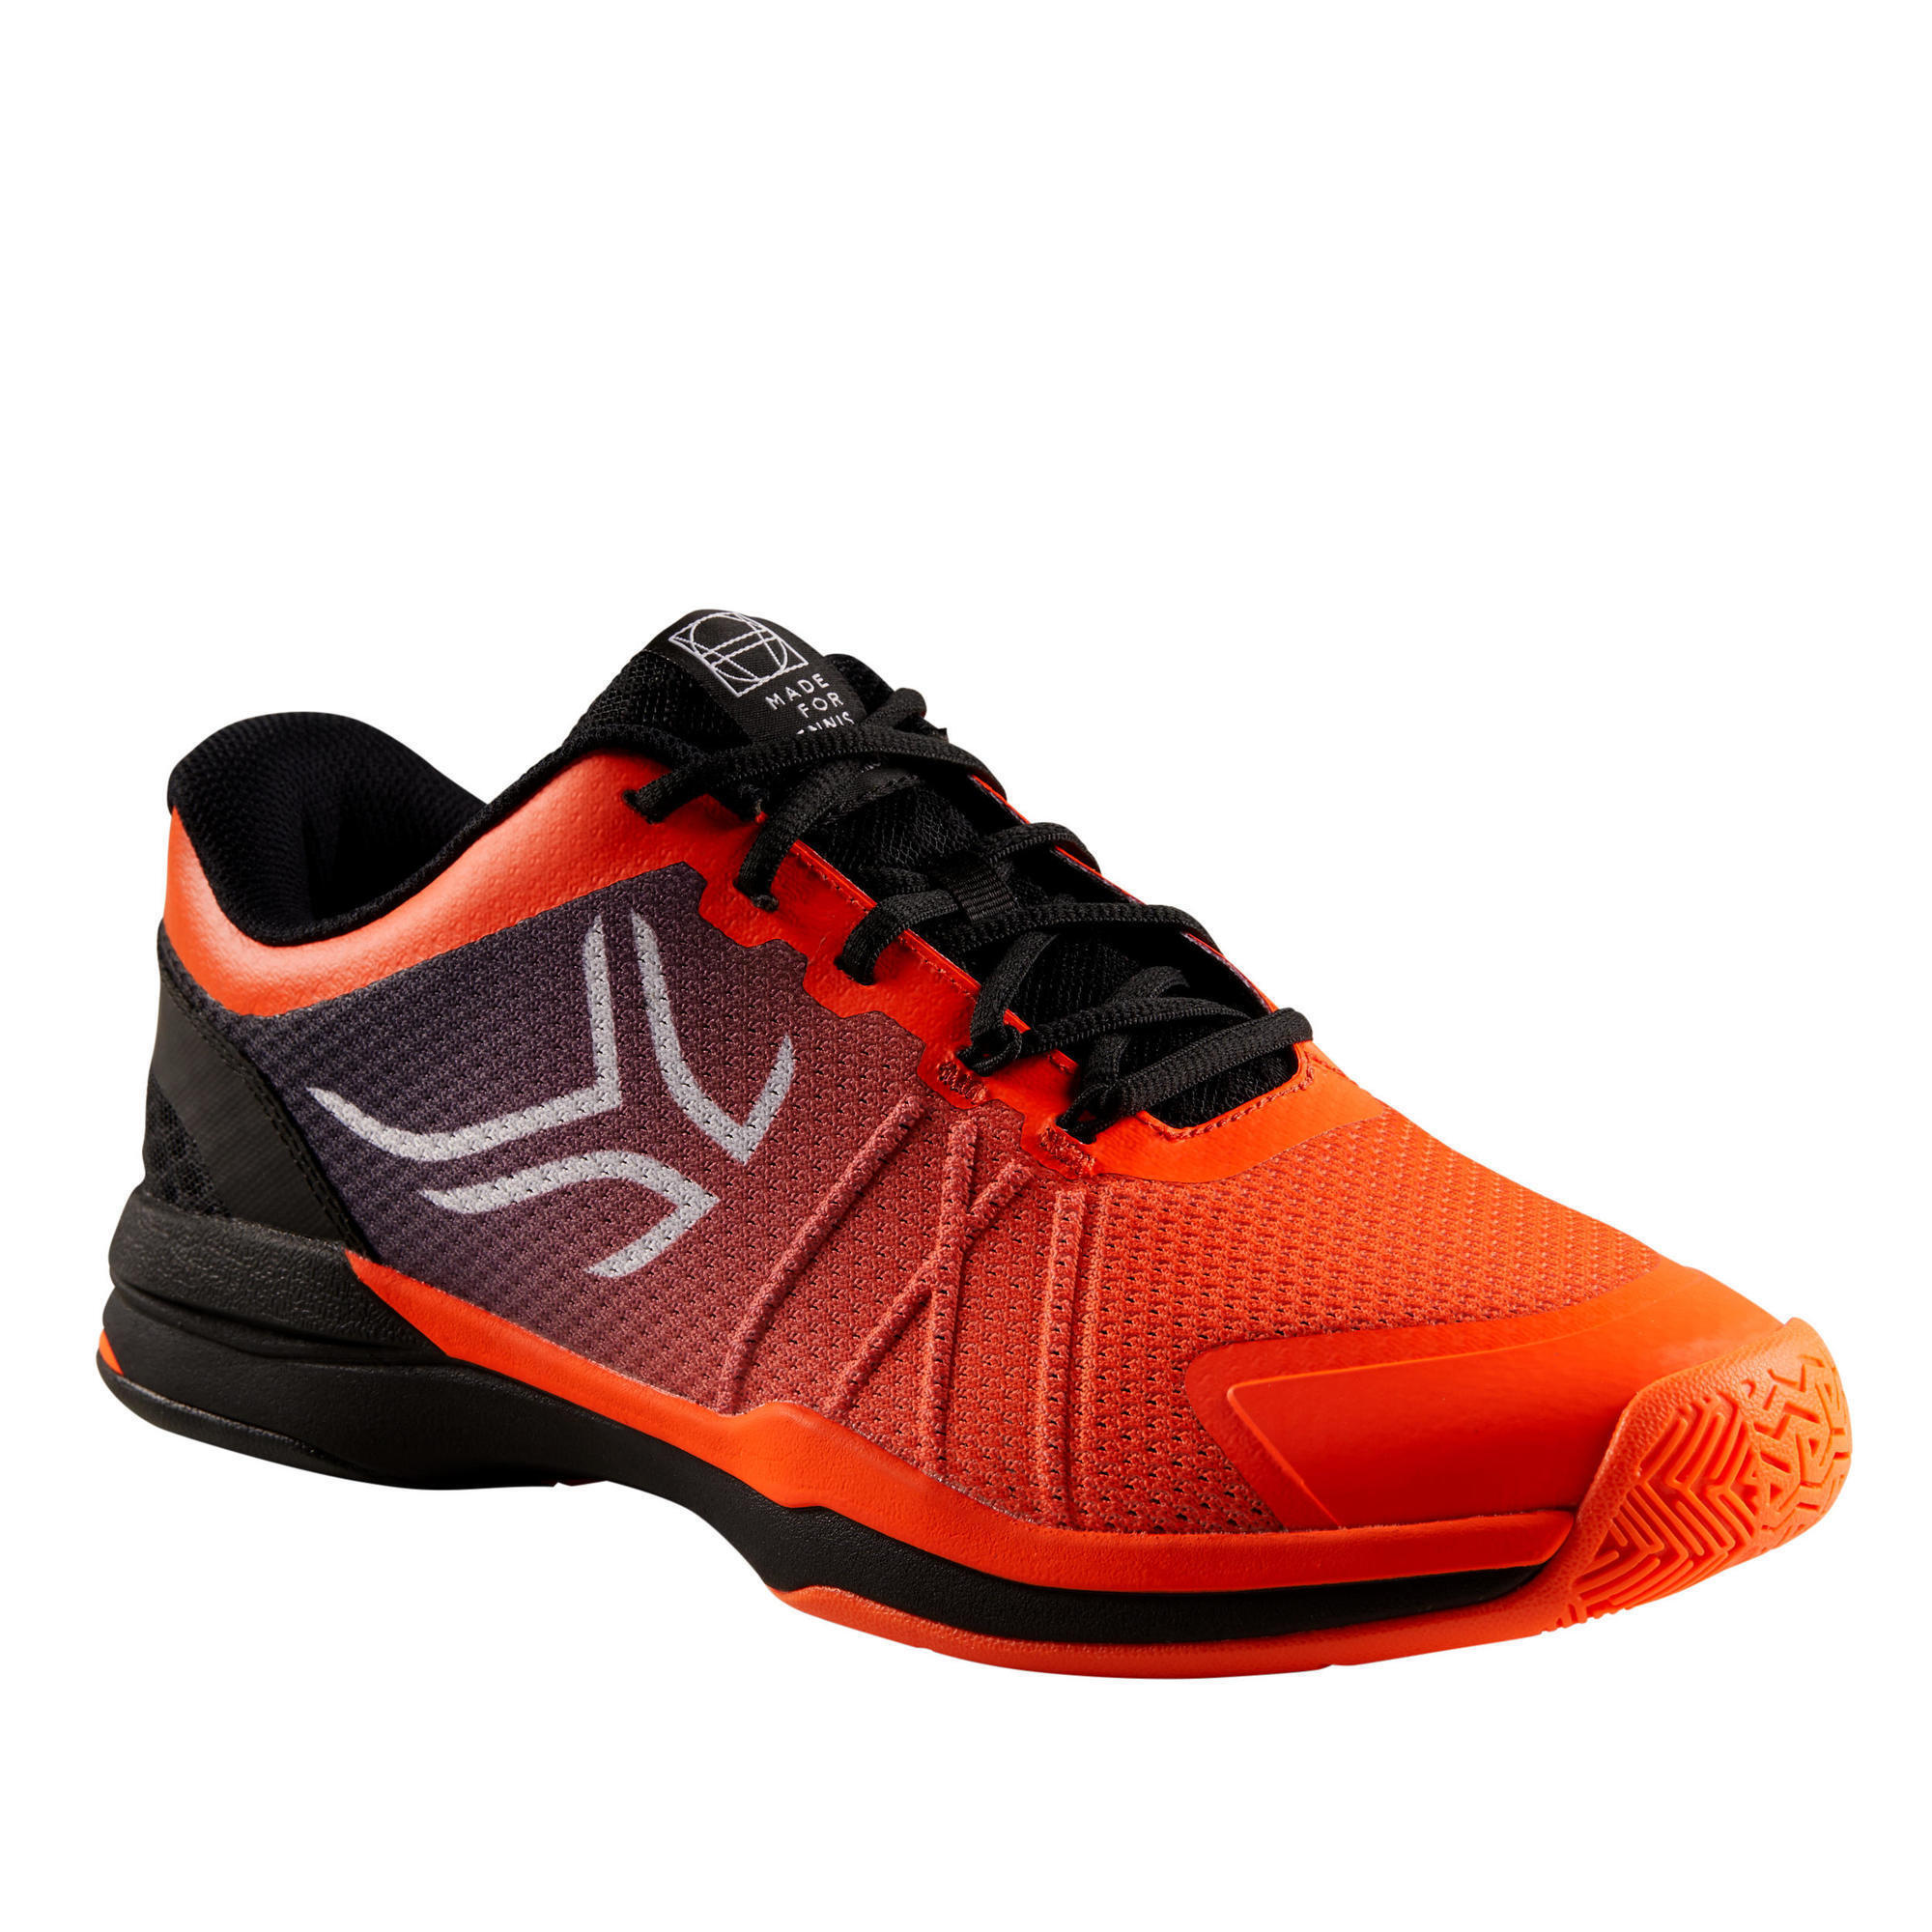 Men's Multi-Court Tennis Shoes TS590 - Orange/Black 1/9